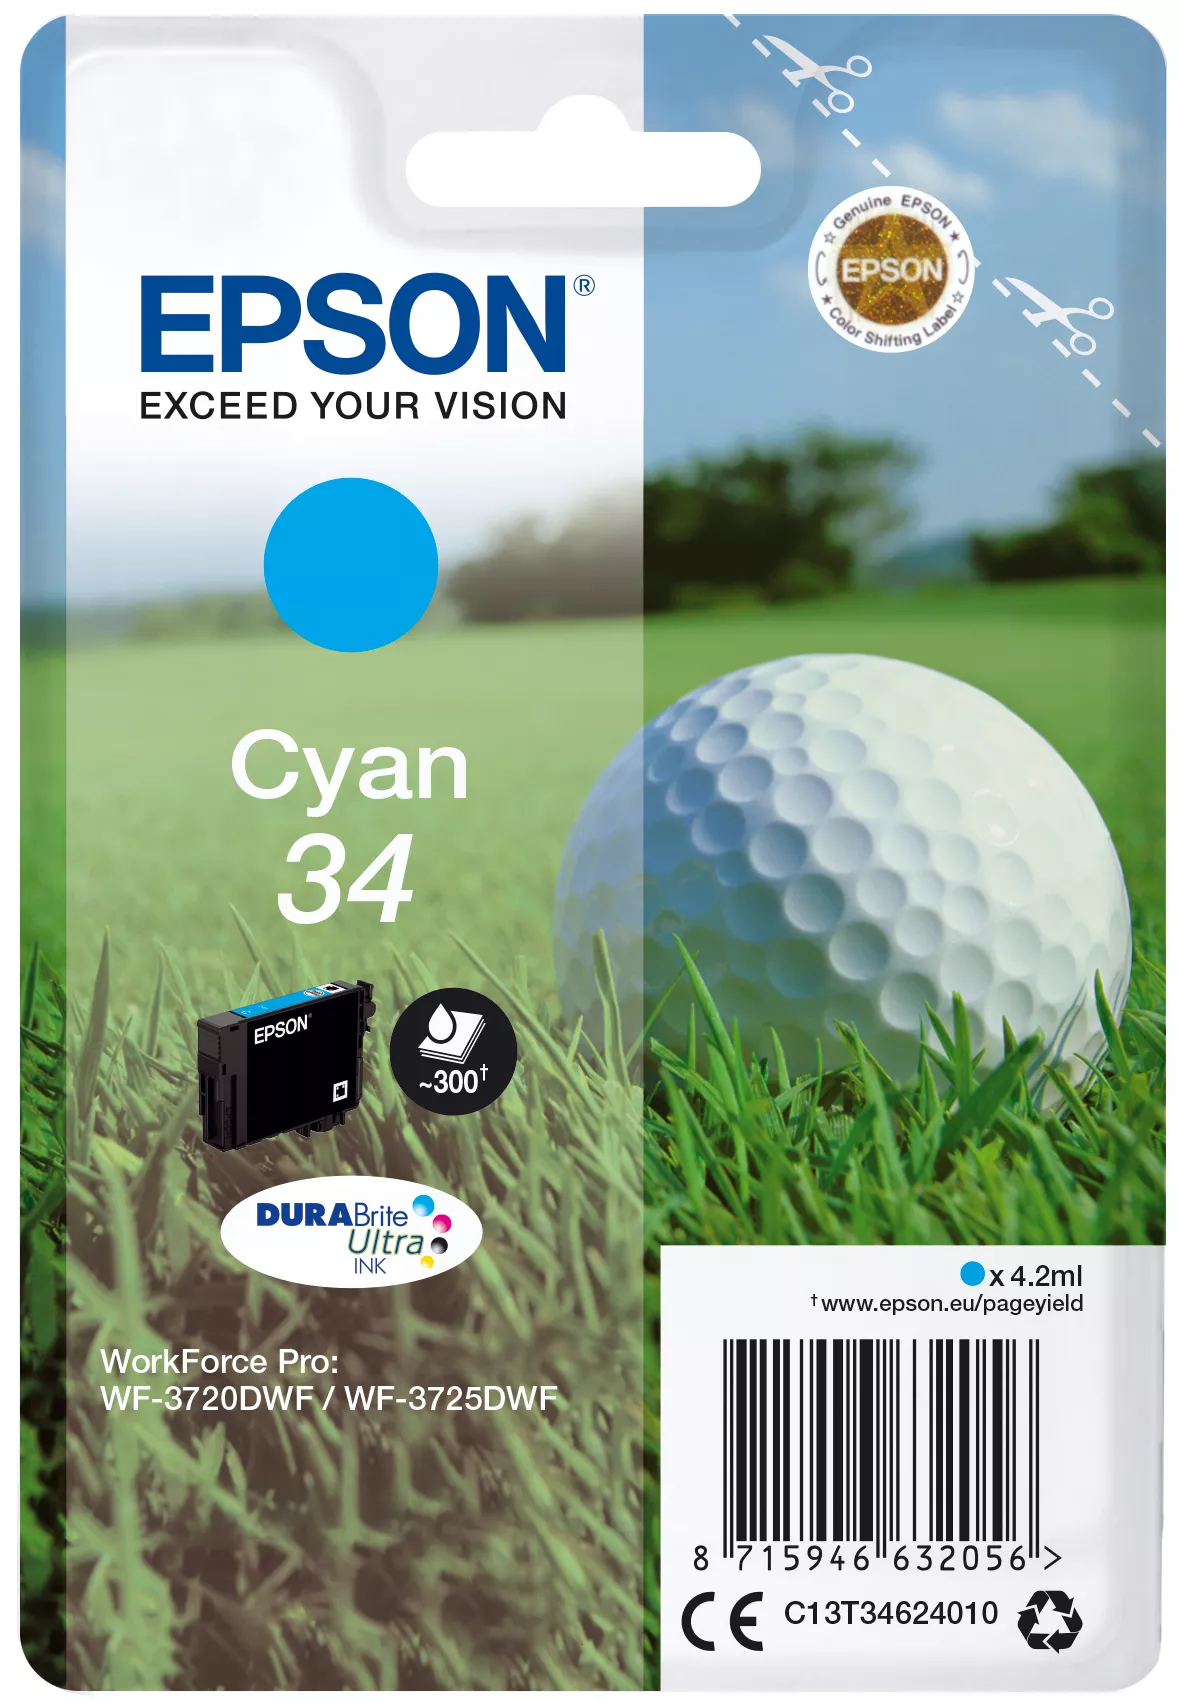 Achat EPSON Singlepack Cyan 34 - DURABrite Ultra Encre au meilleur prix